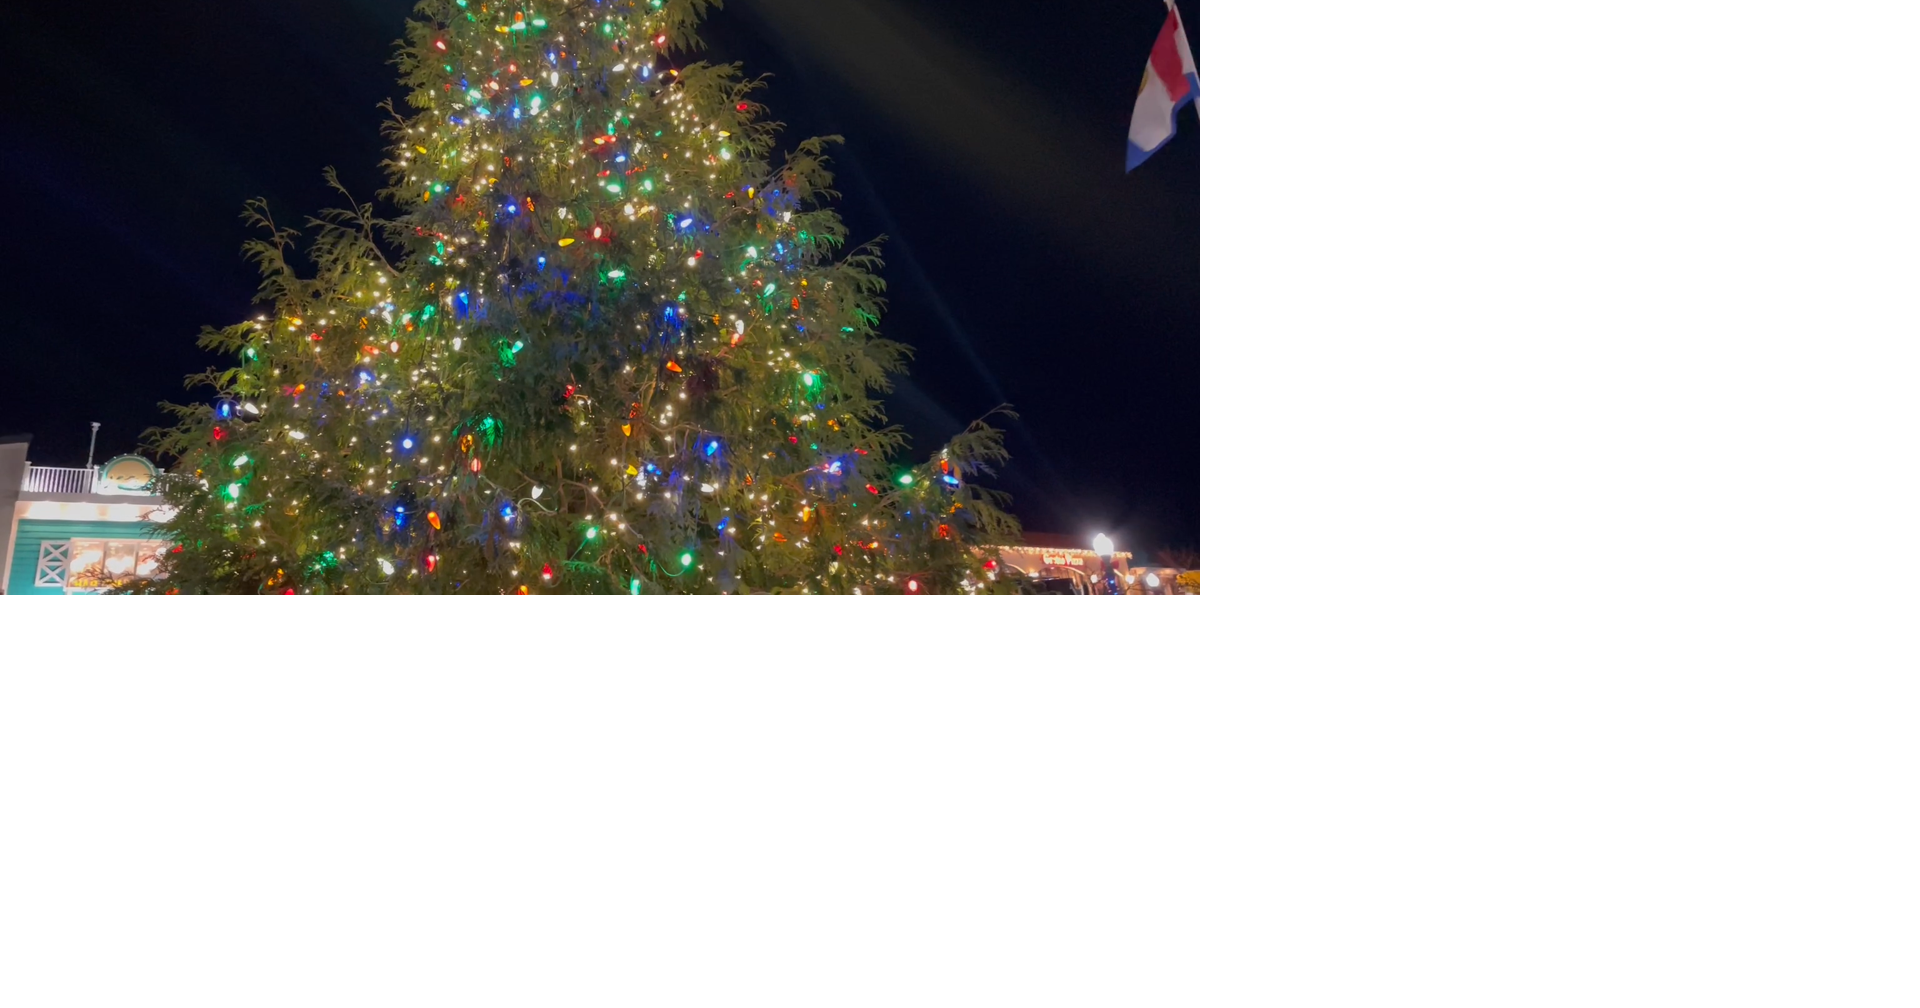 Rehoboth Beach Christmas Tree lighting brightens holiday cheer